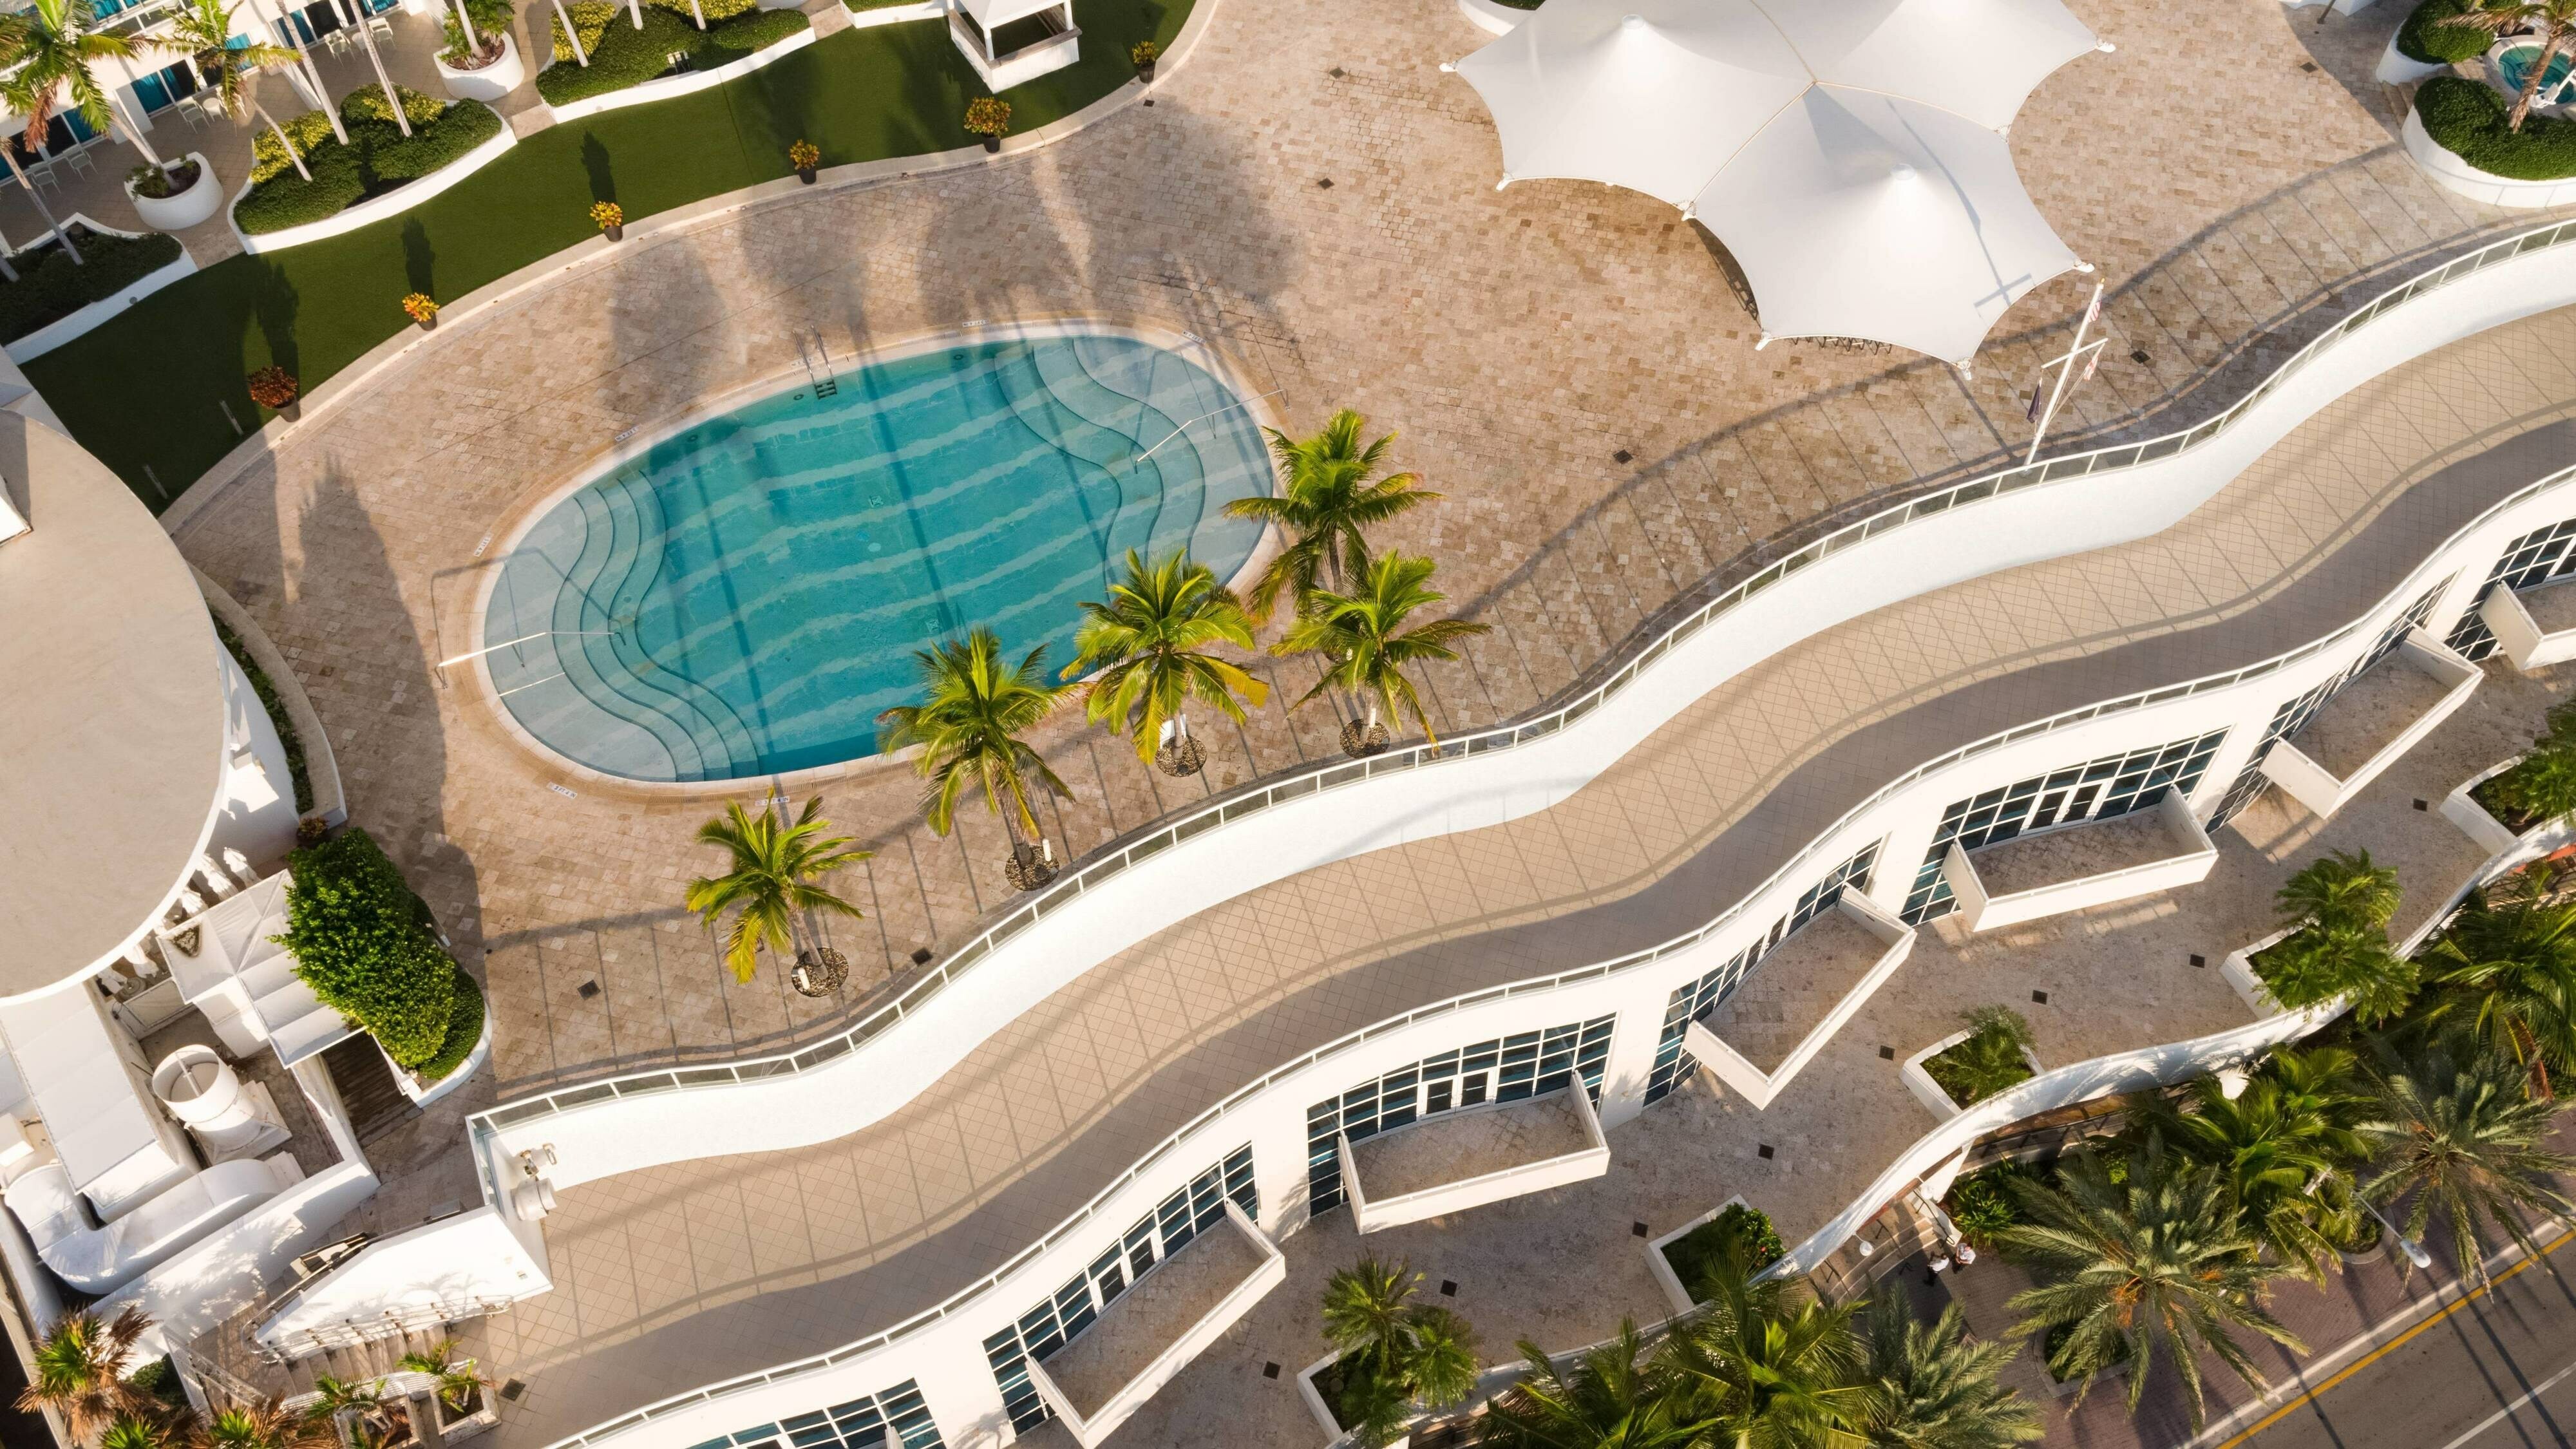 Photo of The Ritz-Carlton, Fort Lauderdale, Fort Lauderdale, FL